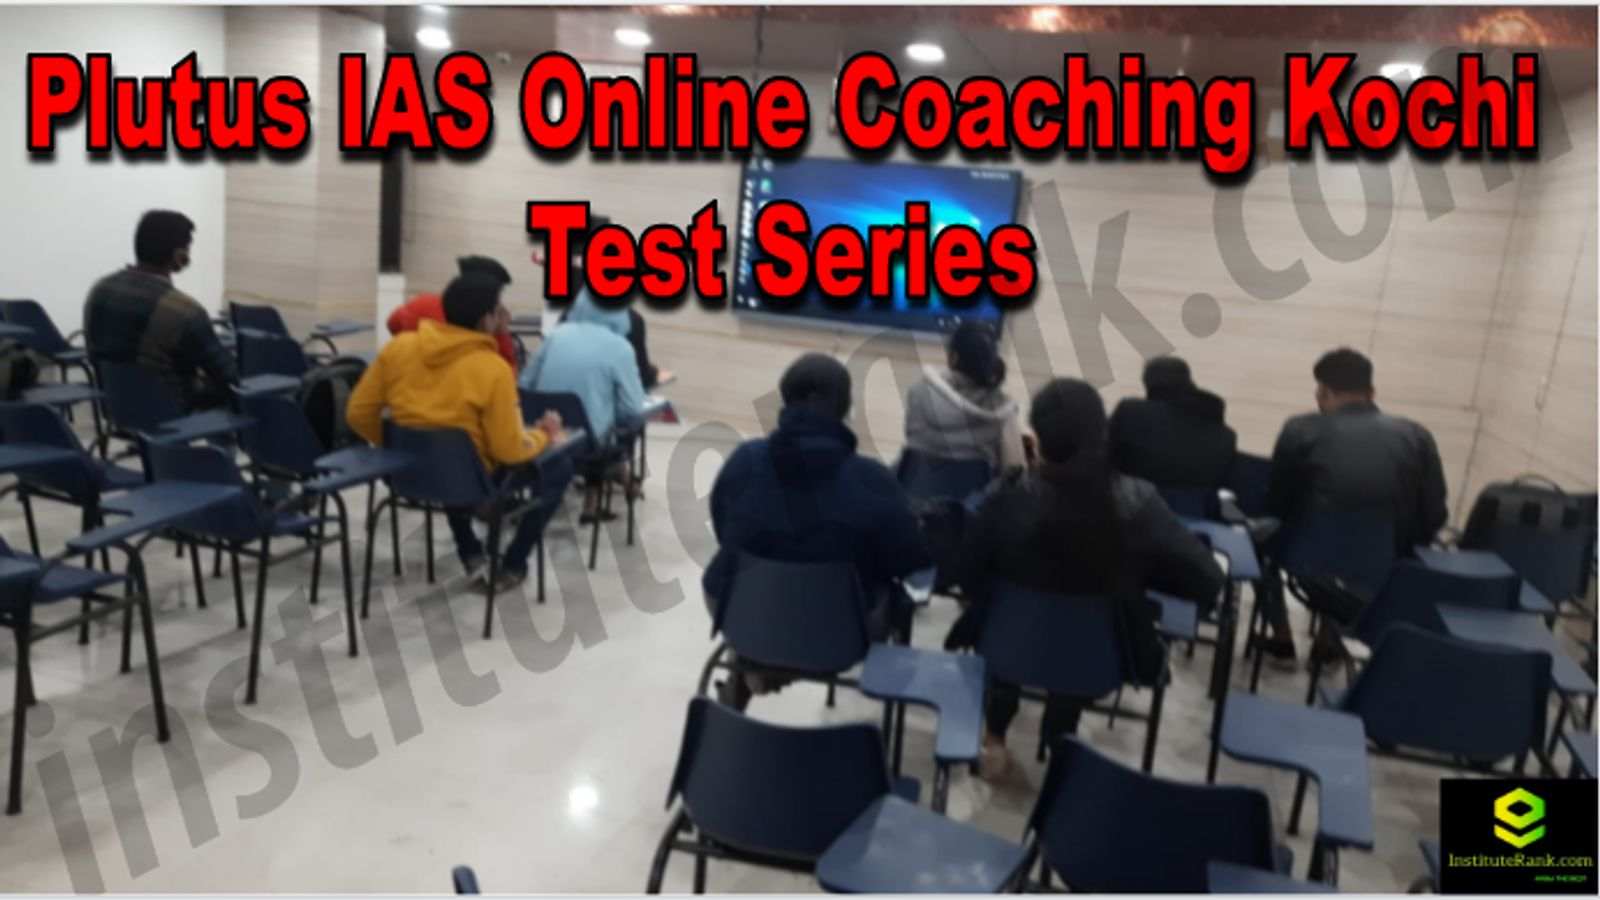 Plutus IAS Online Coaching Kochi Reviews Test Series